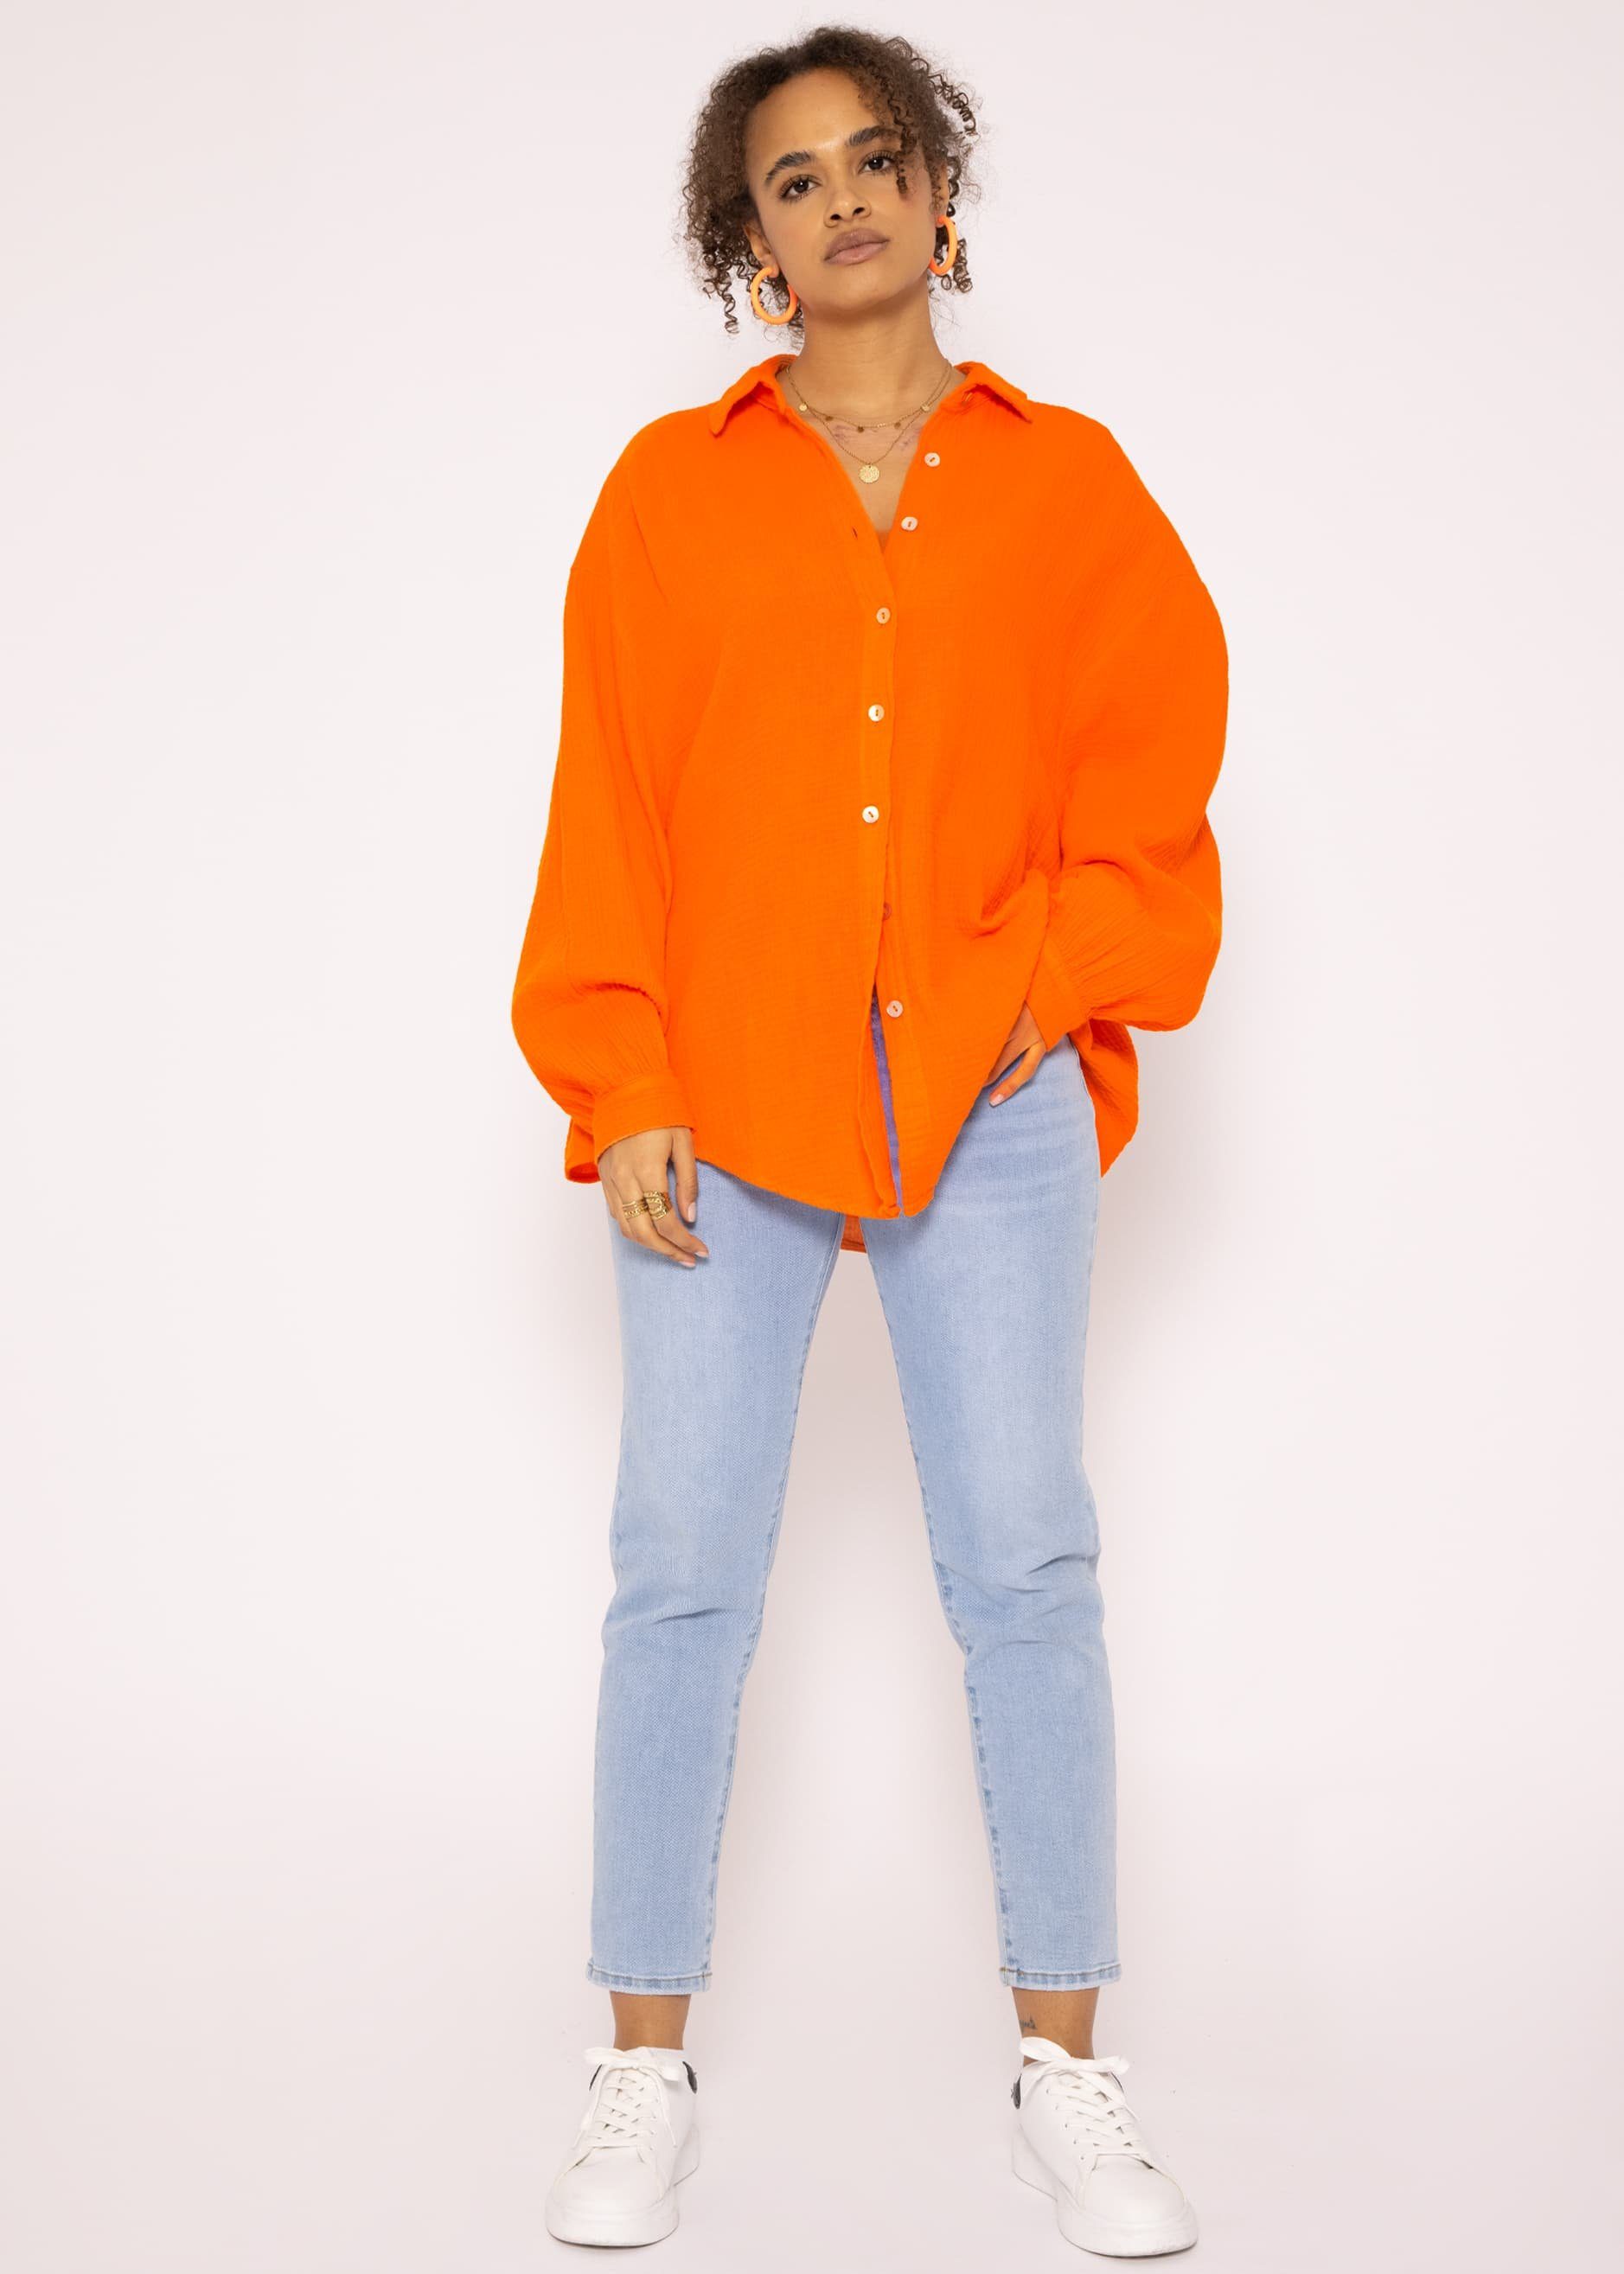 Langarm Size aus SASSYCLASSY One Longbluse lang 36-48) Orange Hemdbluse Damen Baumwolle Musselin mit Bluse (Gr. Oversize V-Ausschnitt,